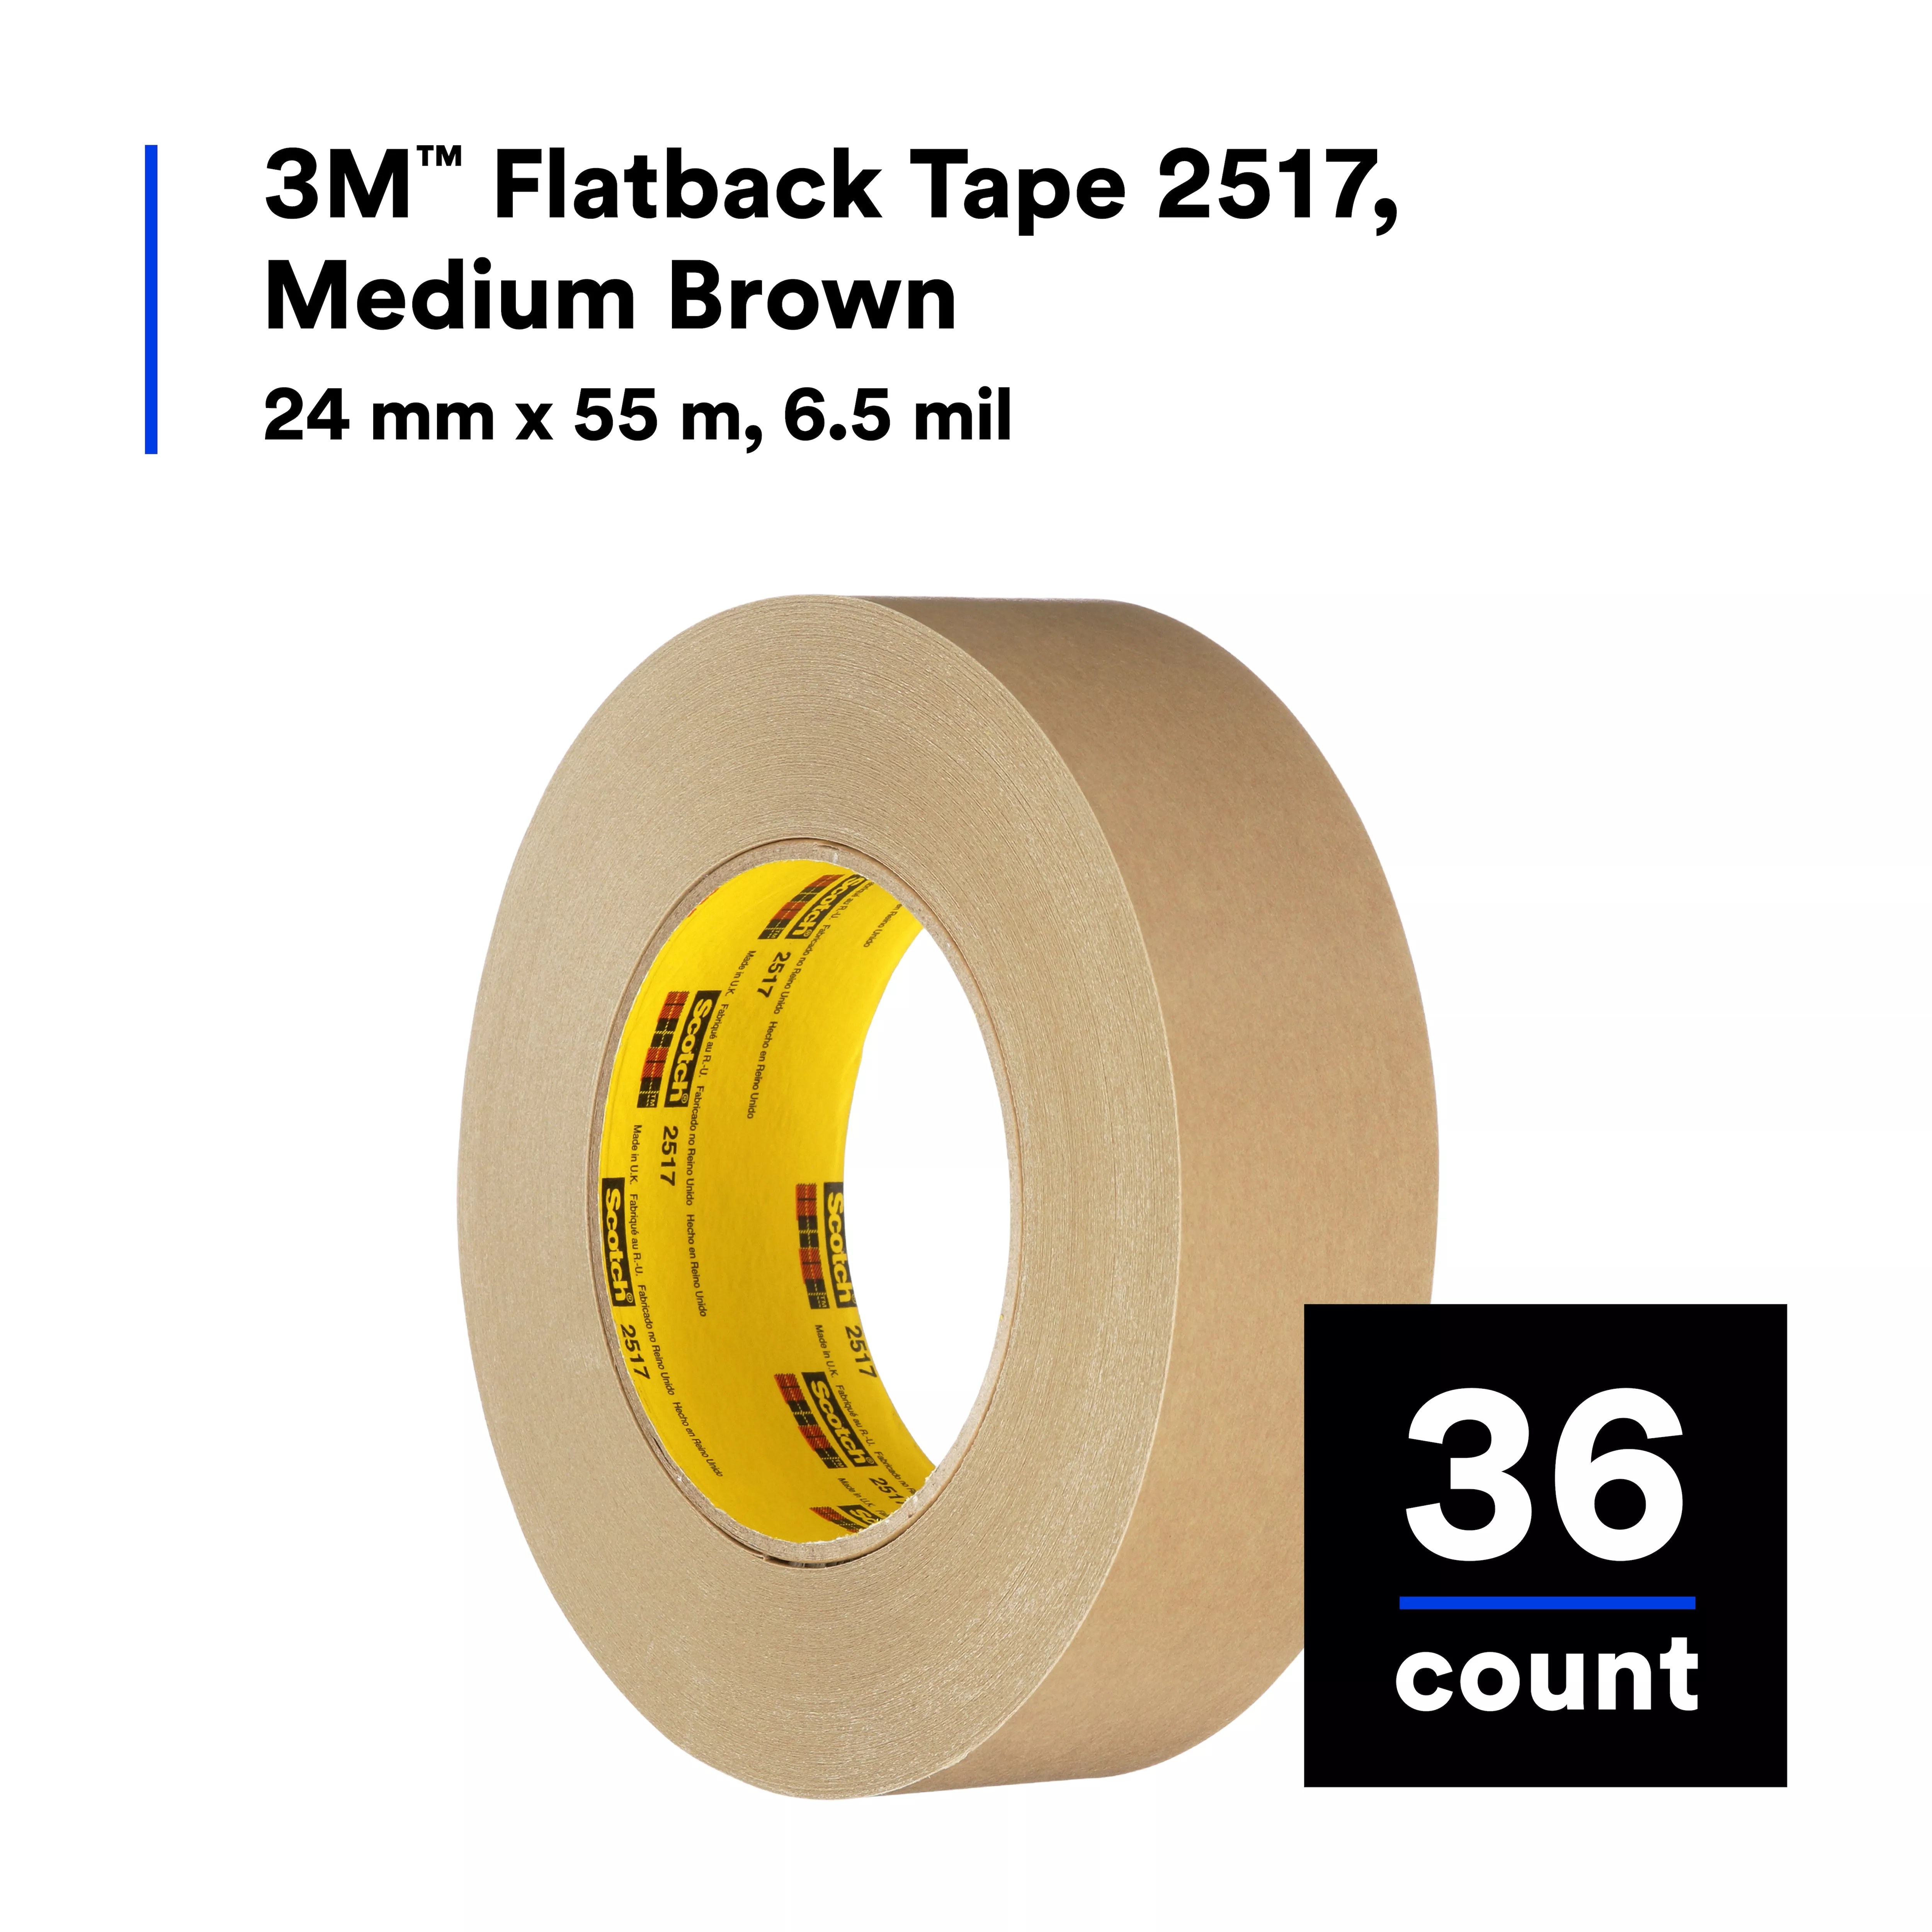 Product Number 2517 | 3M™ Flatback Tape 2517